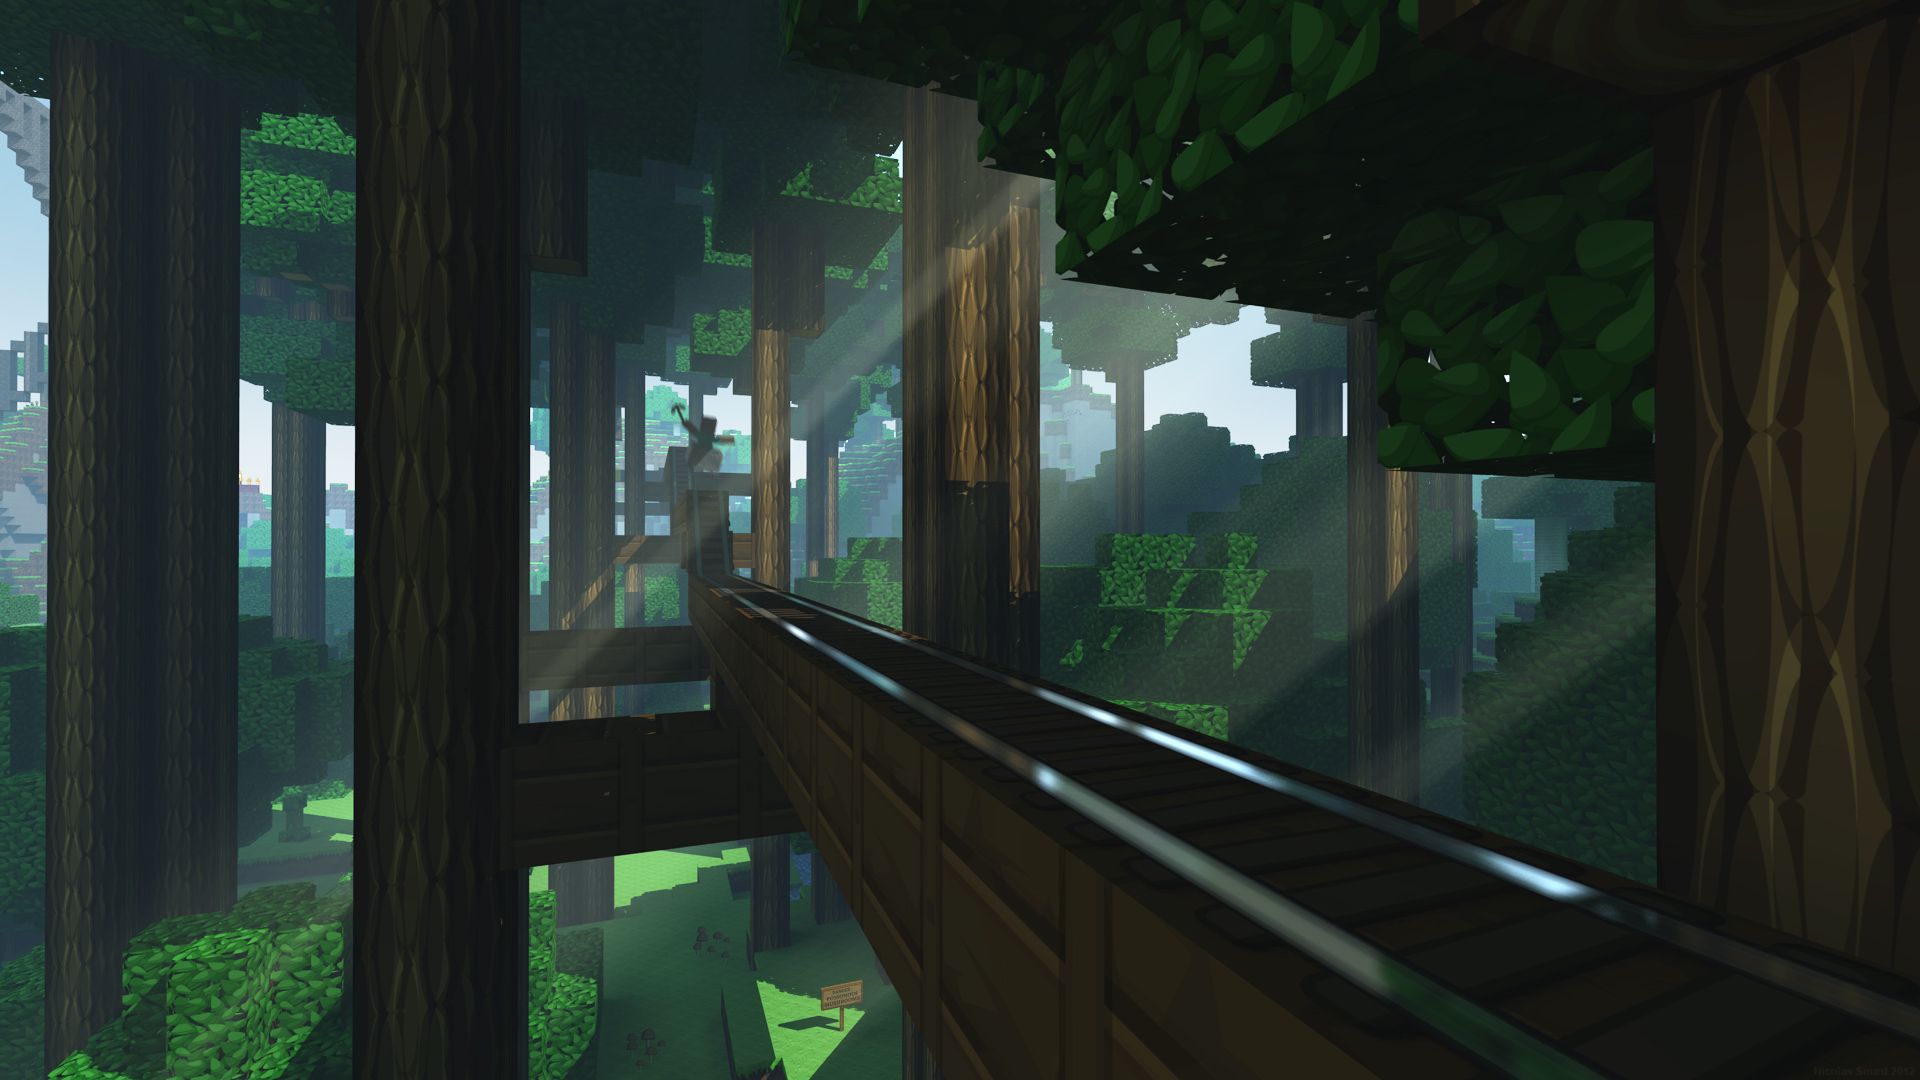 Khu rừng trong Minecraft